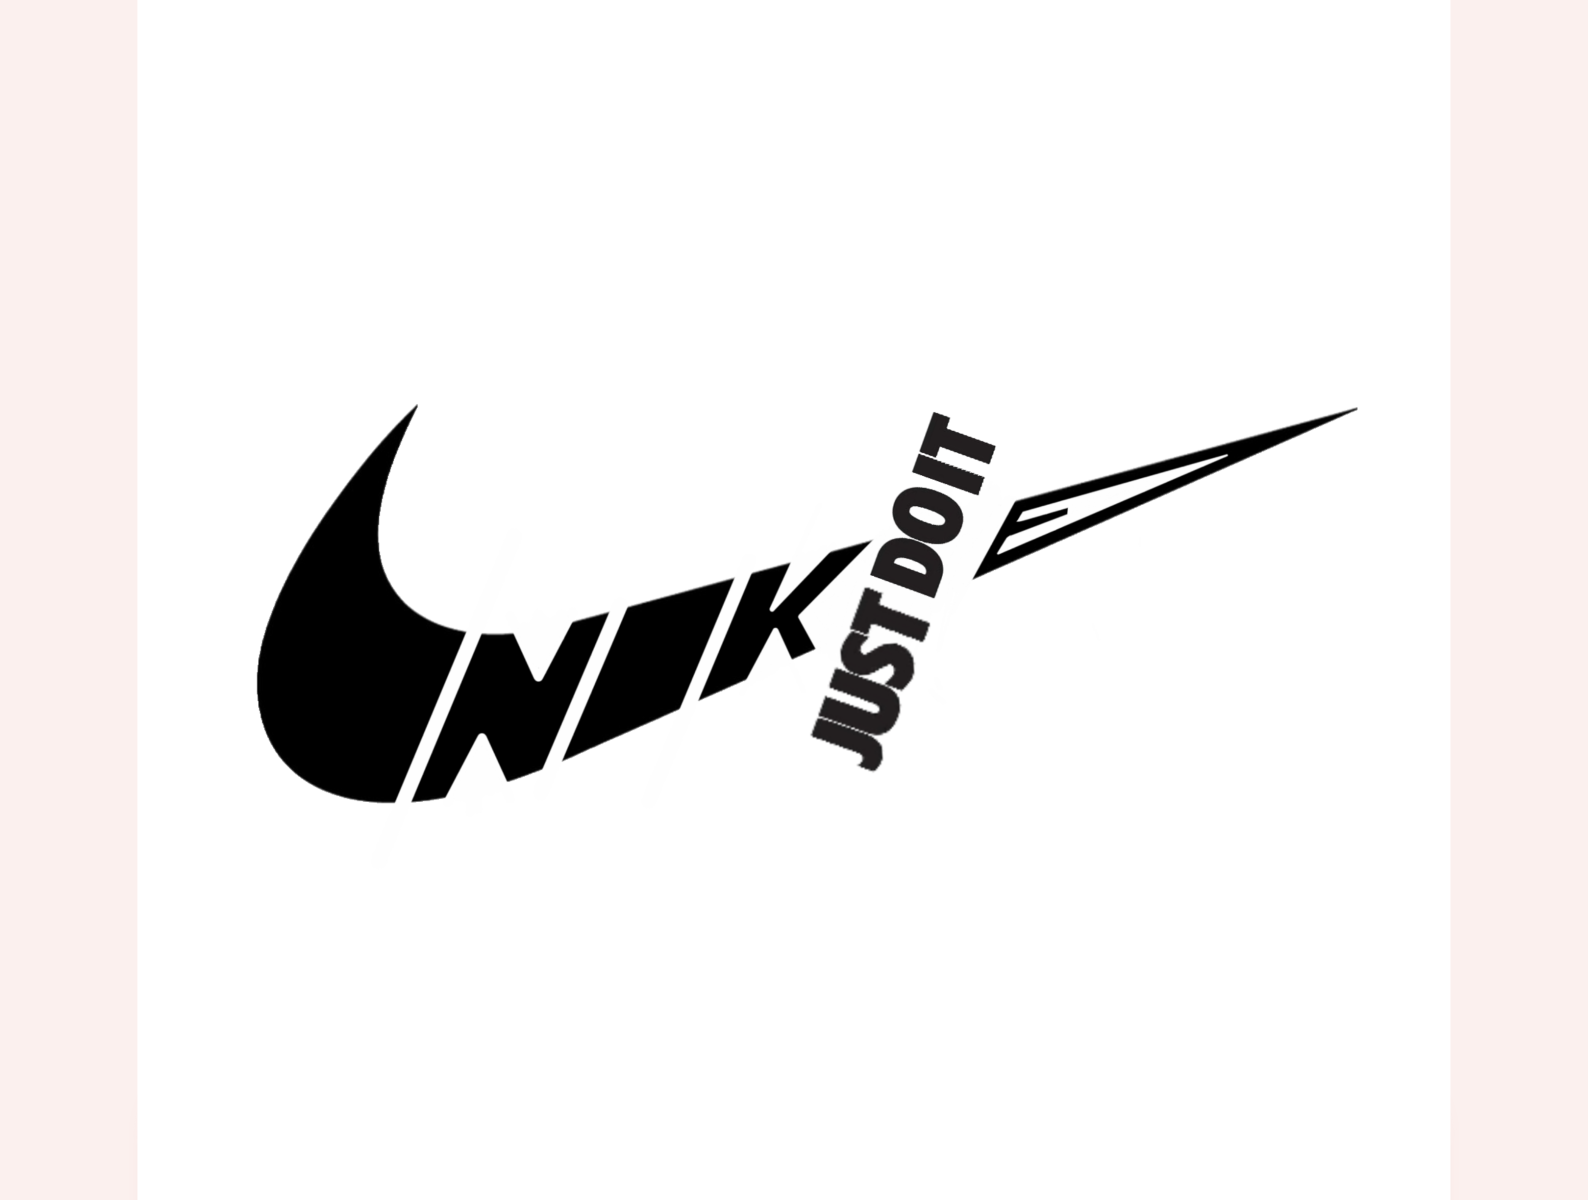 bañera Semicírculo consumo Nike logo redesign by 𝗝𝗮𝗵𝘃𝘆• 𝗚𝗿𝗮𝗽𝗵𝗶𝗰 𝗗𝗲𝘀𝗶𝗴𝗻𝗲𝗿 on  Dribbble